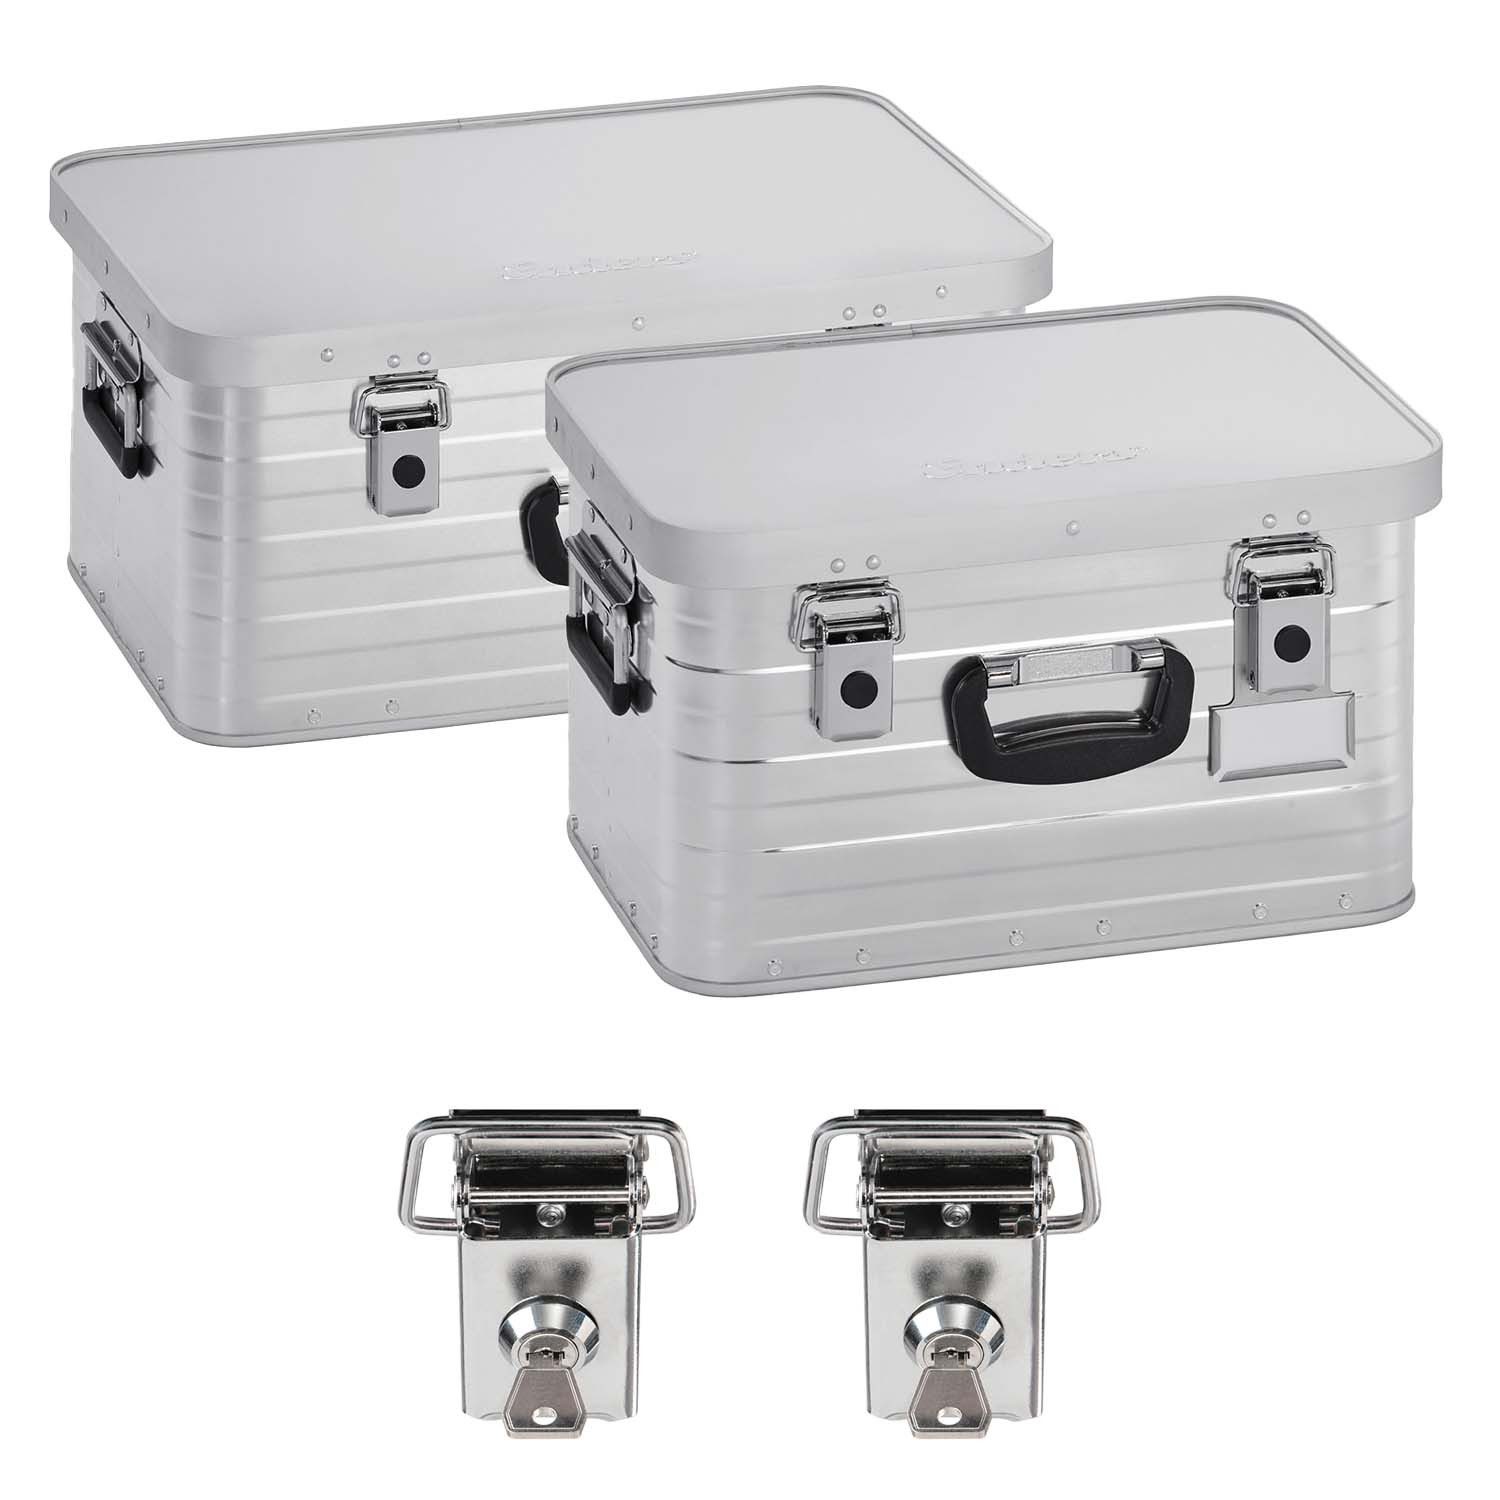 Enders® Aufbewahrungsbox Alubox 29 L + Alubox 47 L inkl. 2x Schloss-Set, Alukiste Transportbox Lagerbox Alukoffer Metallkiste Alubox